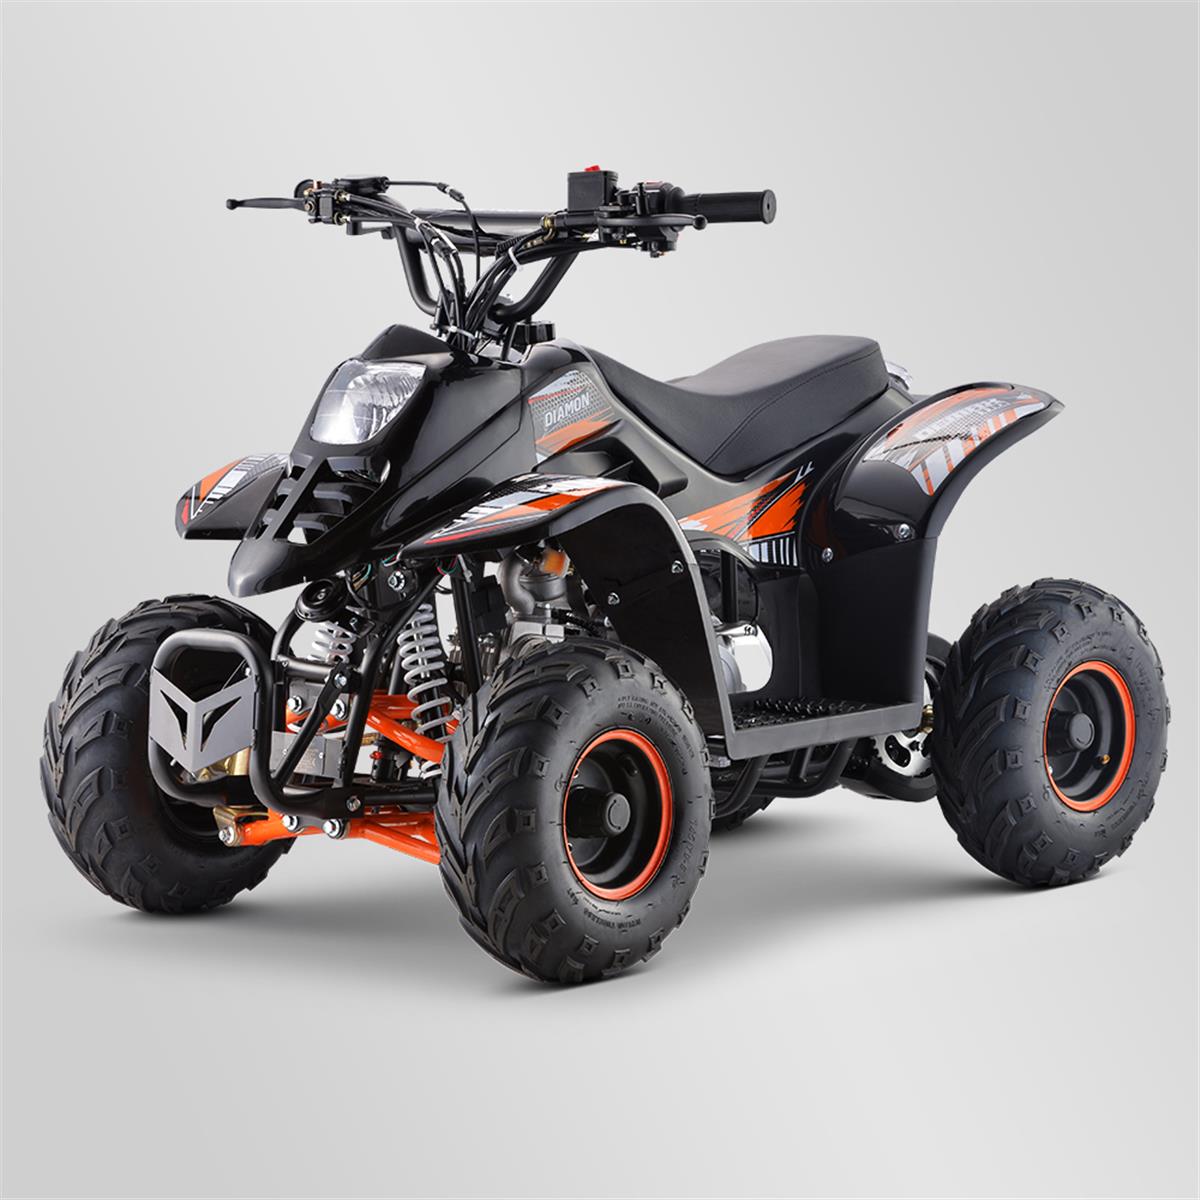 Quad enfant 125cc hrx orange Small MX | Smallmx - Dirt 